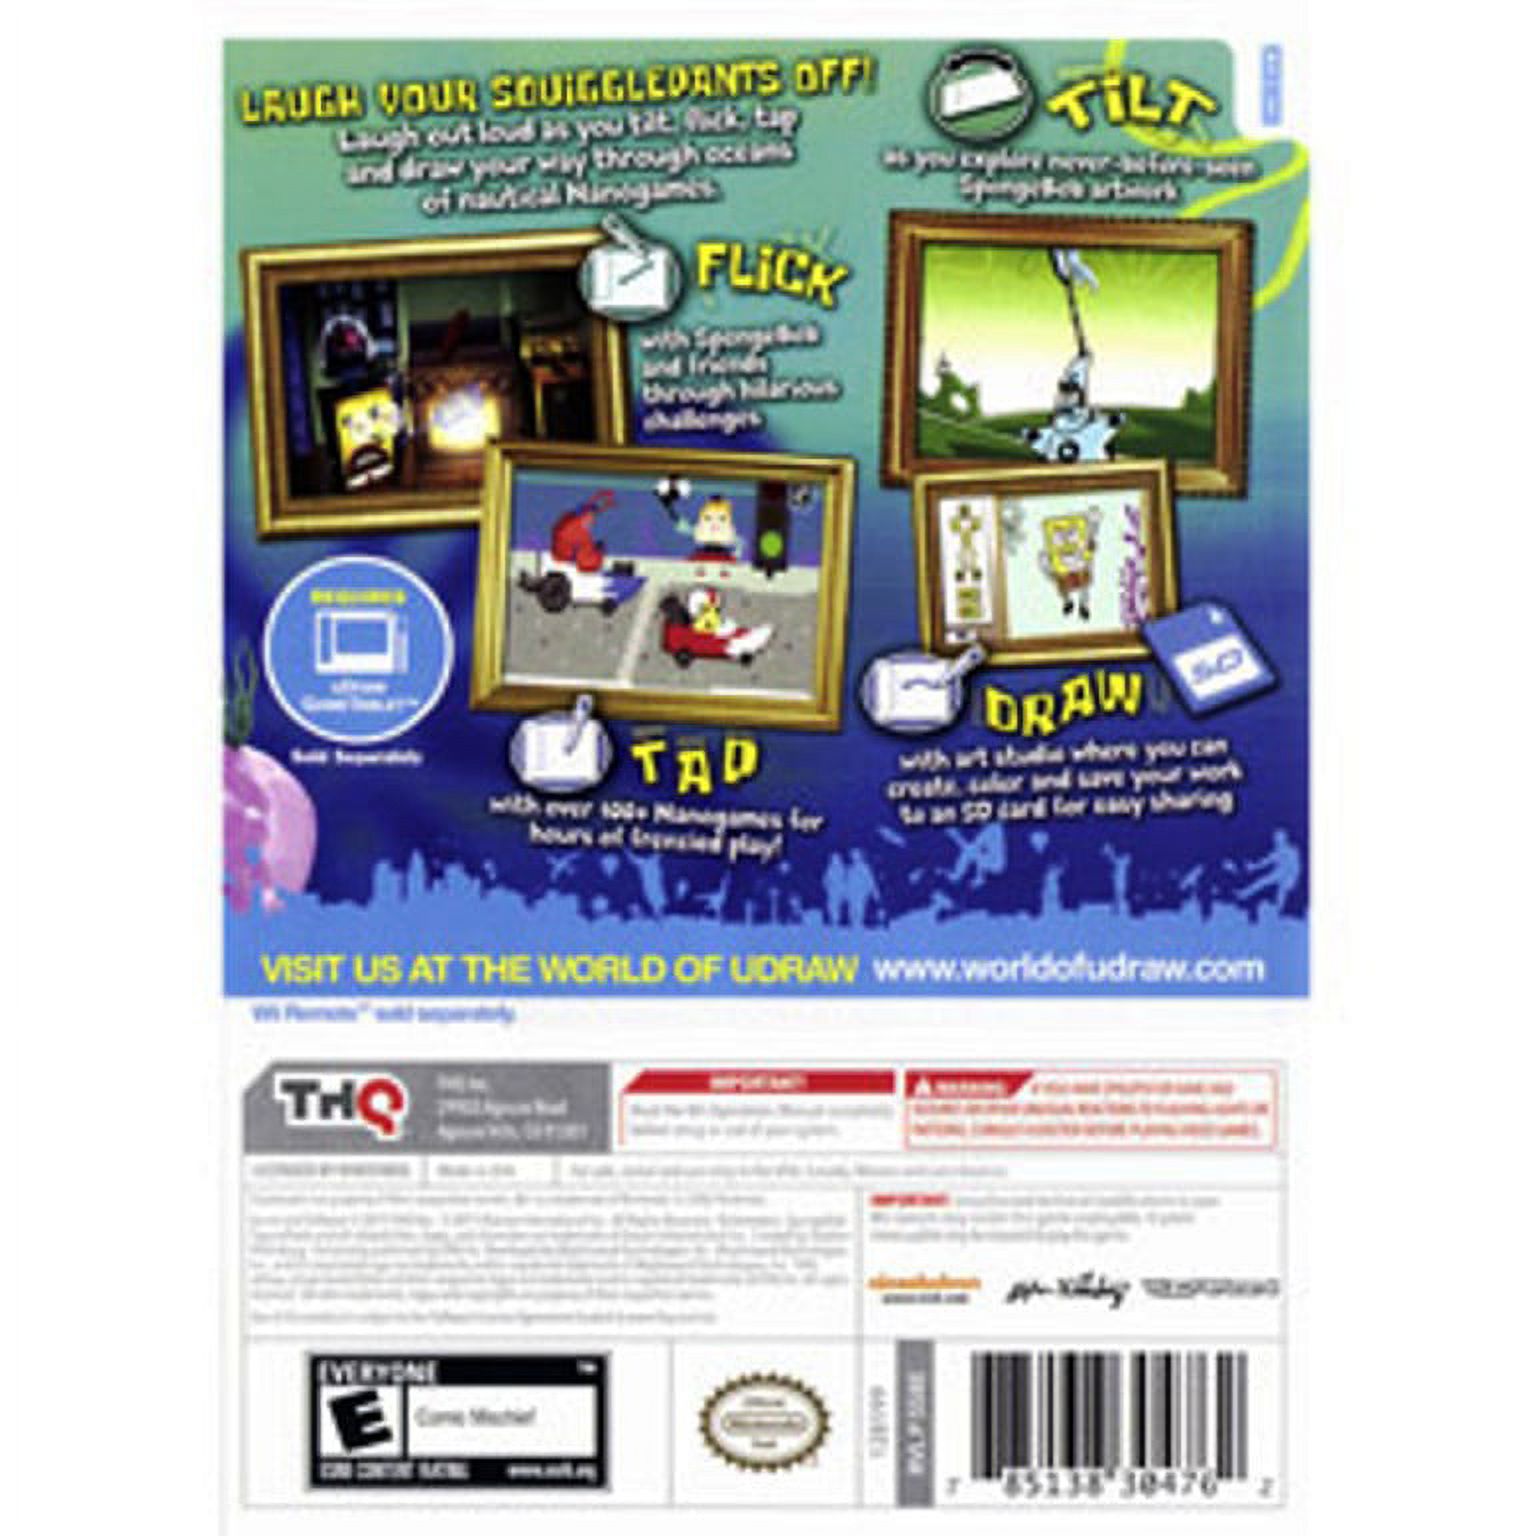 THQ uDraw SpongeBob SquigglePants (Nintendo Wii) - image 2 of 2